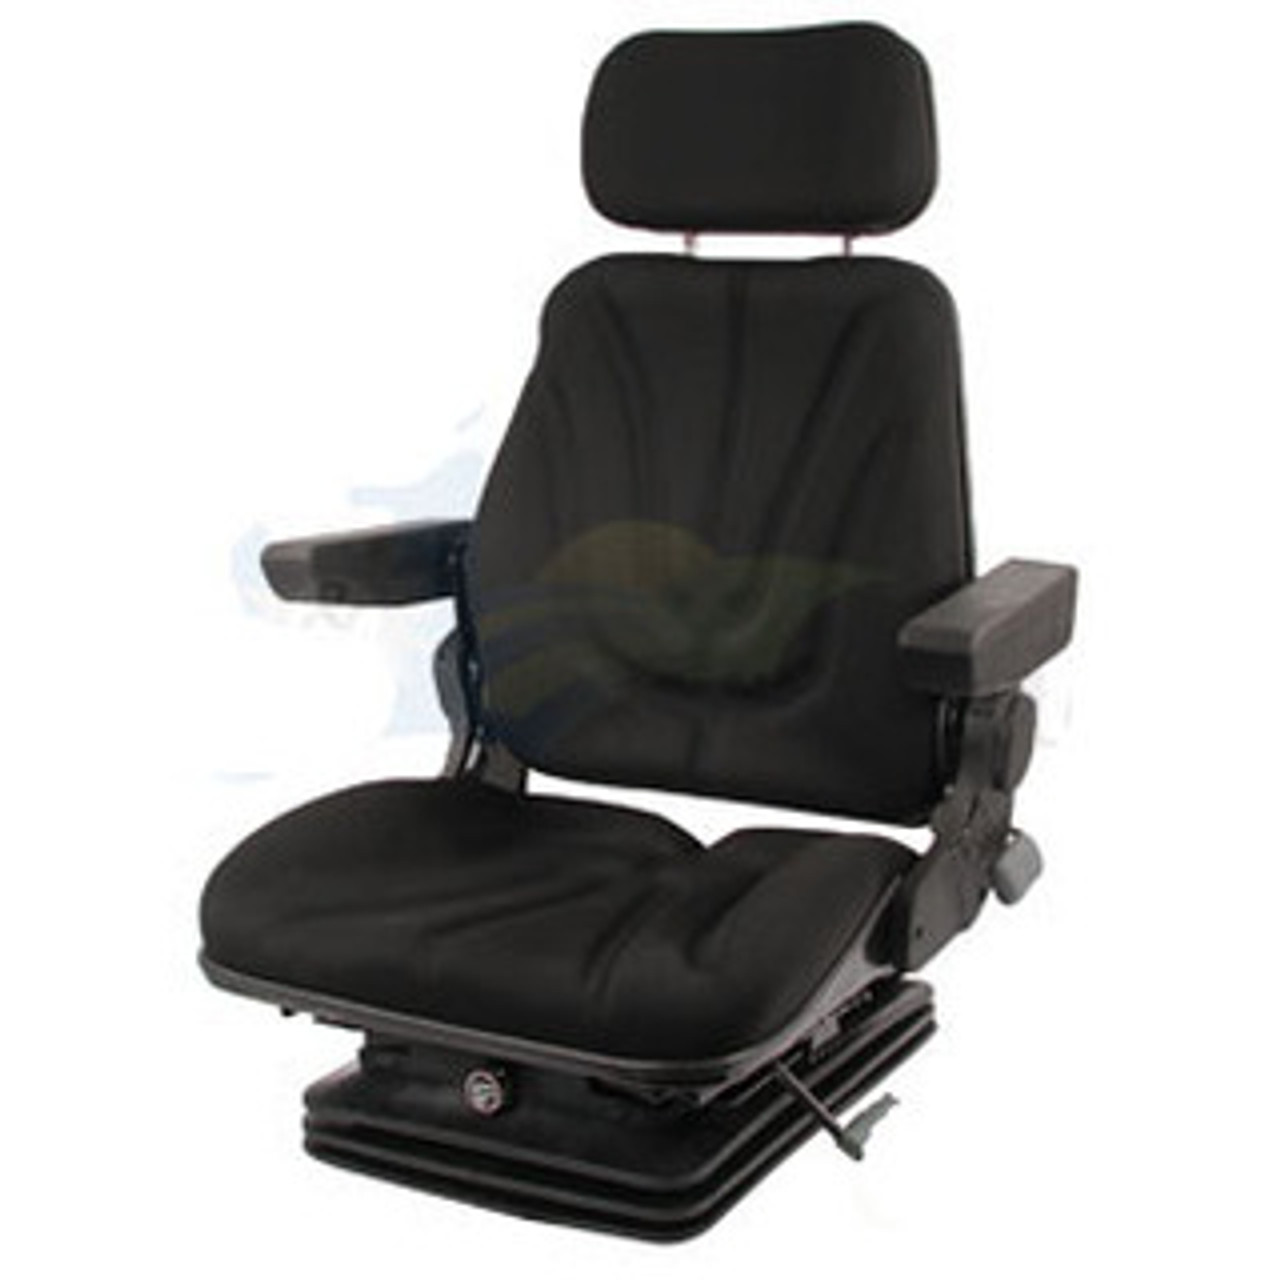 Versatile Tractor Seat A-F10A260 F10 Series, Air Suspension / Armrest / Headrest / Black Cloth